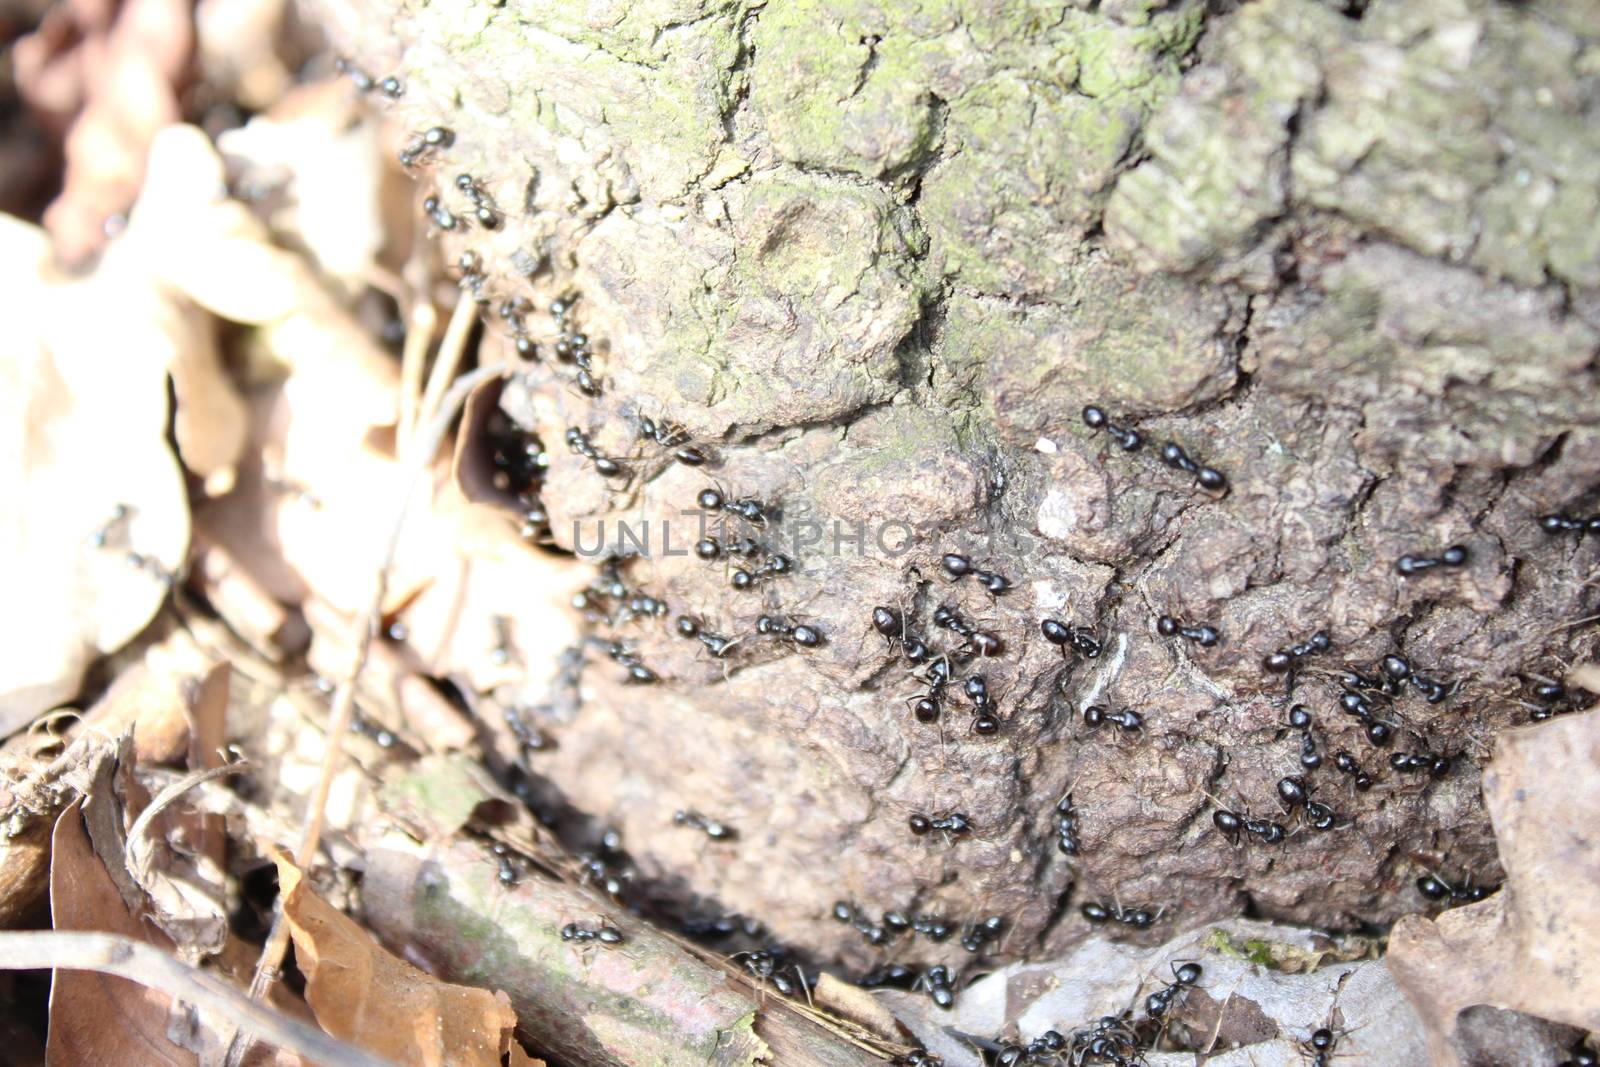 black ants in the forest by martina_unbehauen